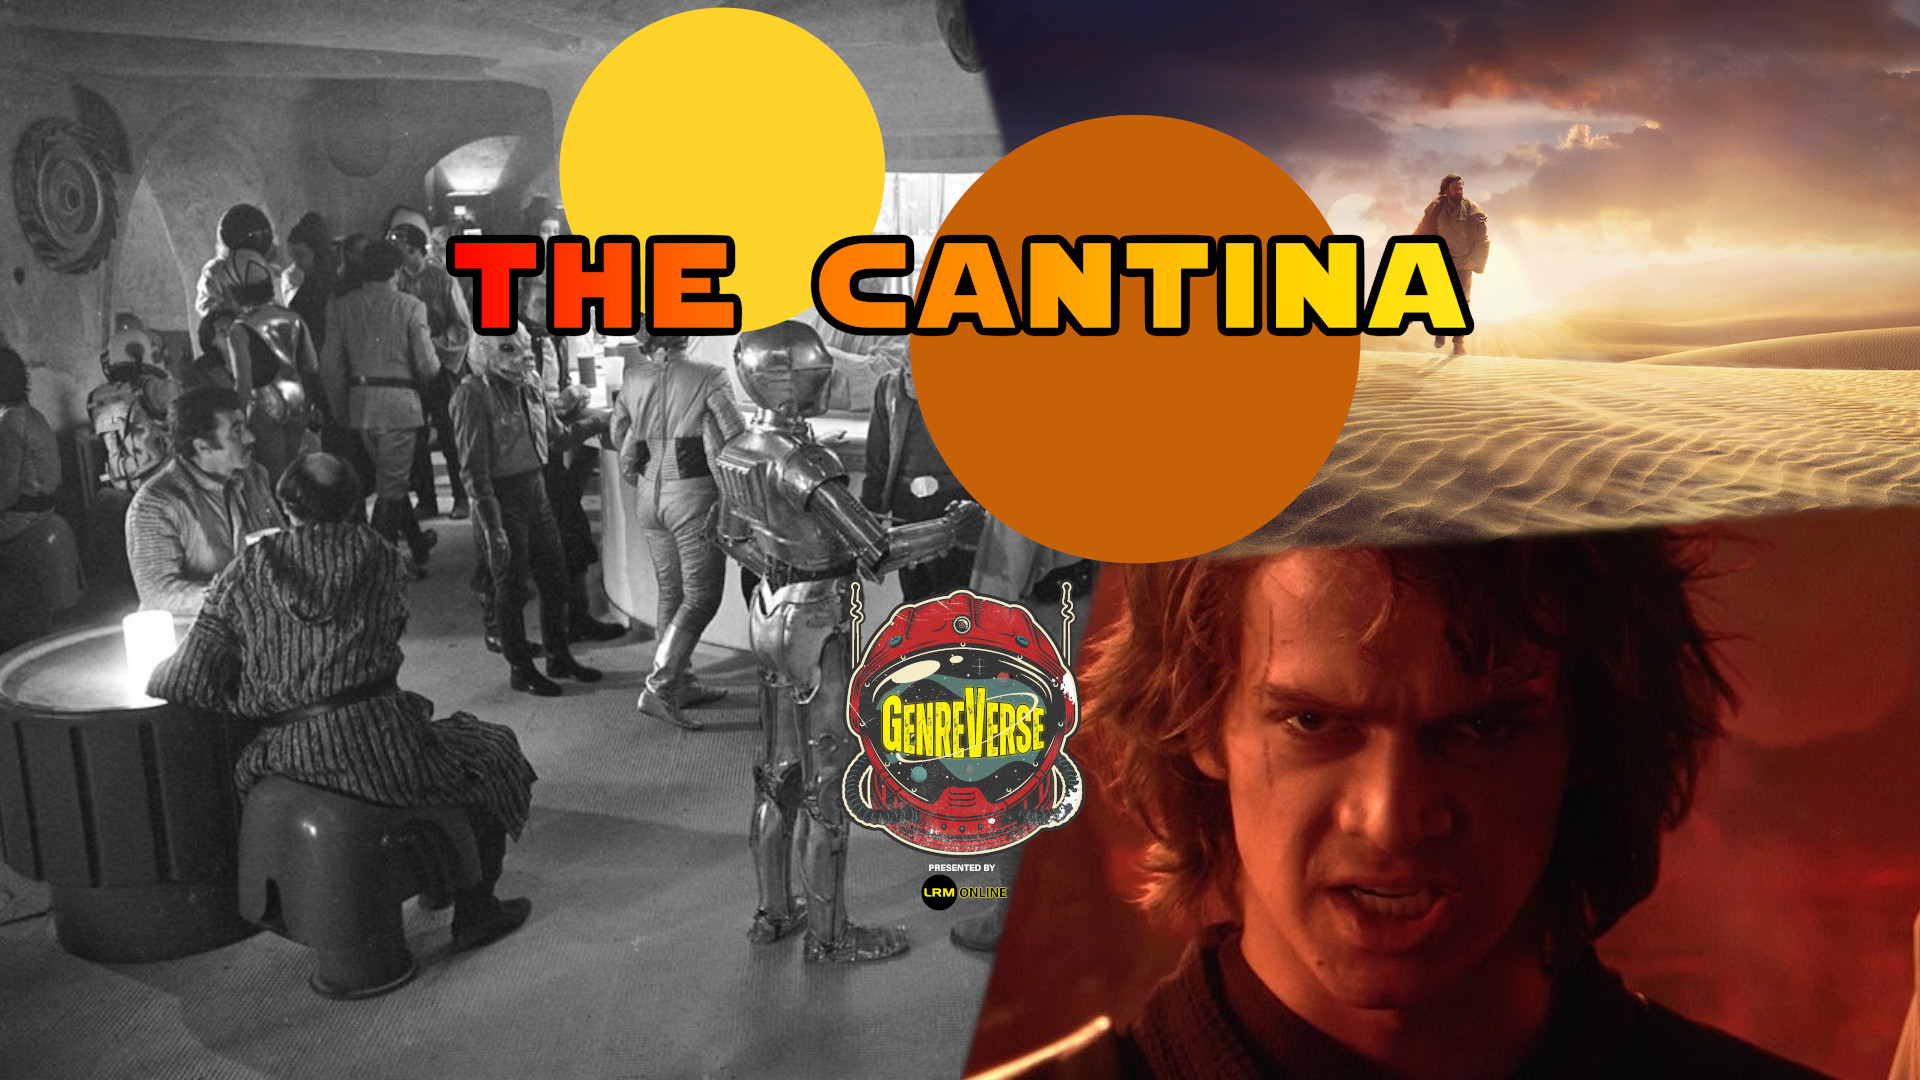 The Cantina Obi-Wan Kenobi News And Rumors John Williams, Bail Organa, Vader's Episode Count & OWK Face Off Twice The Cantina